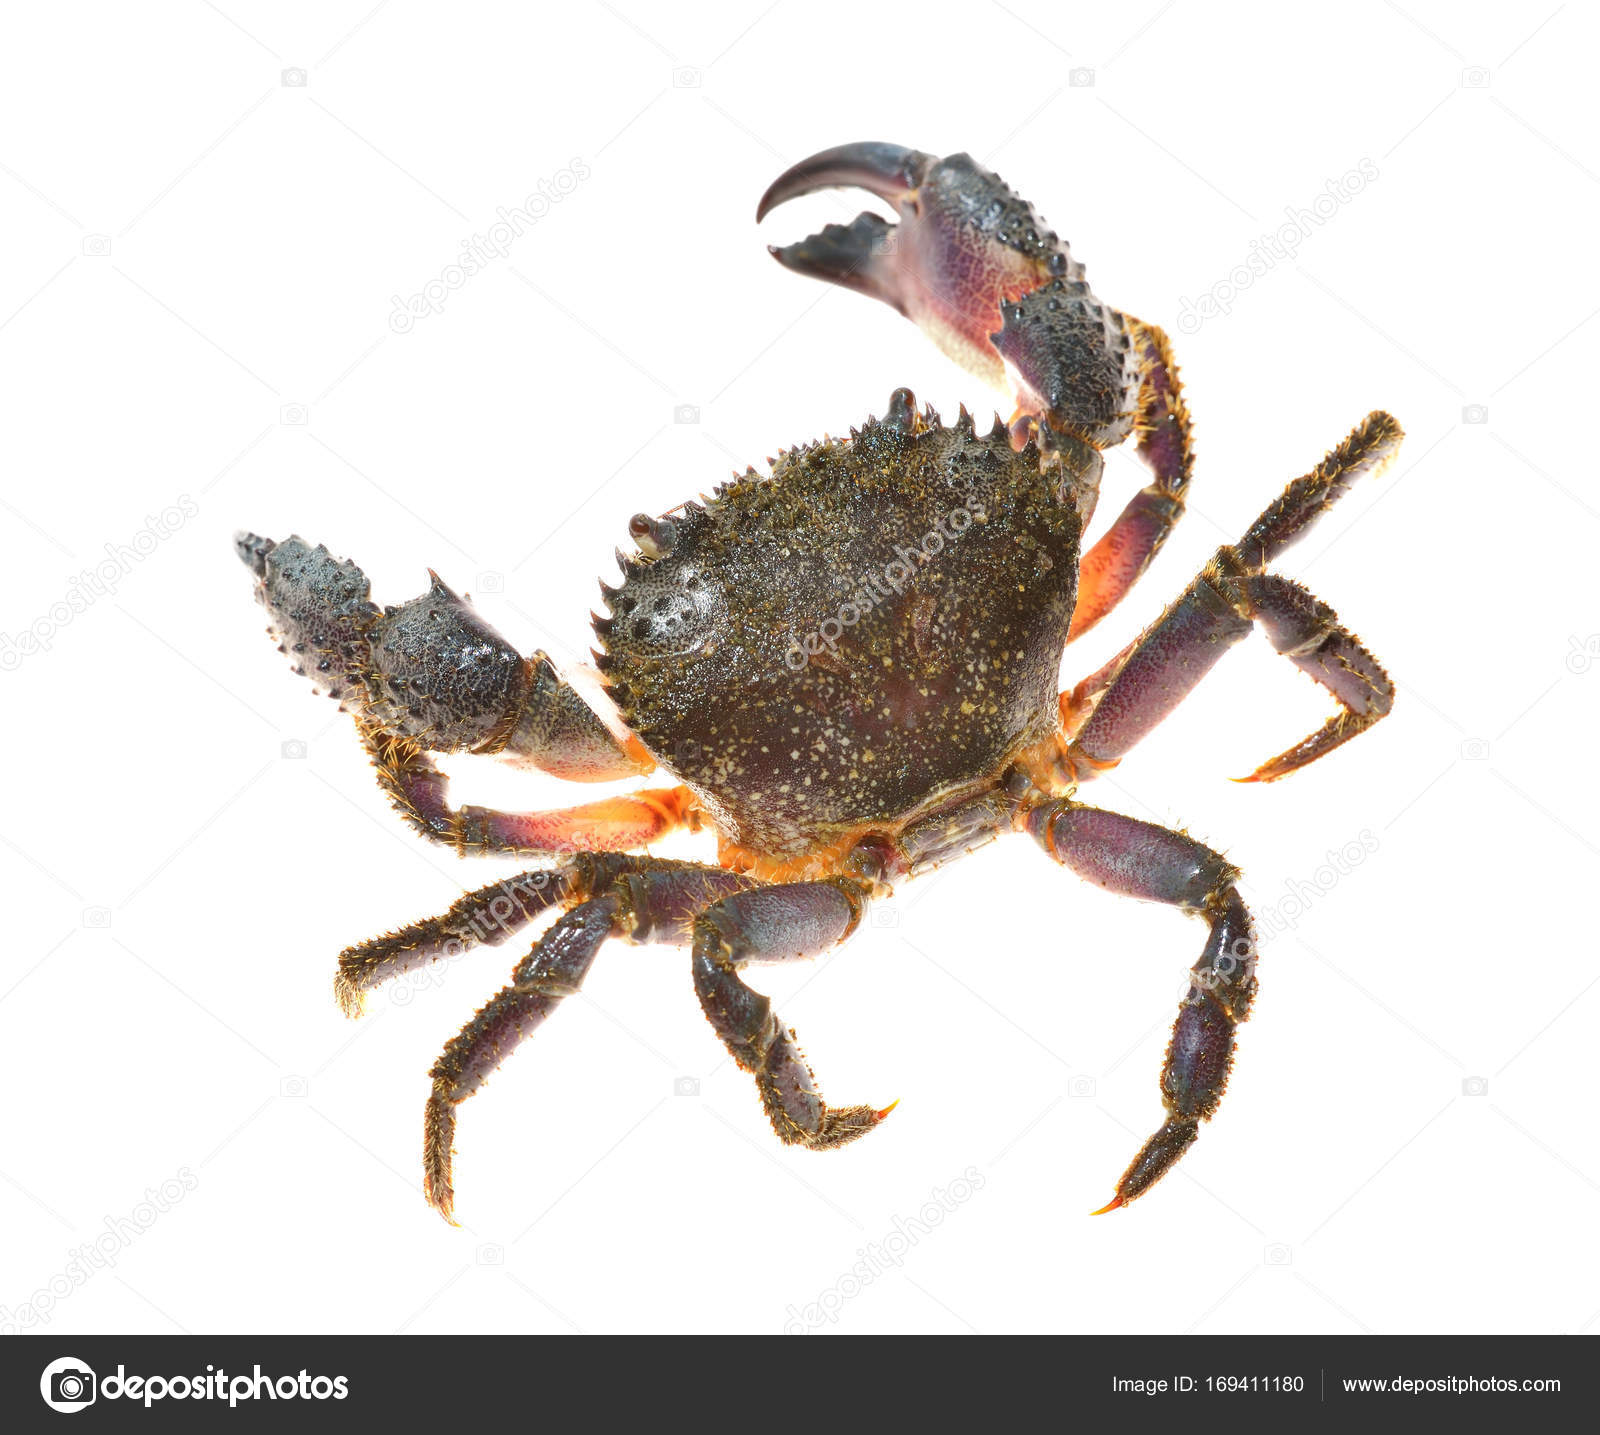 warty crab Eriphia verrucosa — Stock Photo © alex.stemmer #169411180